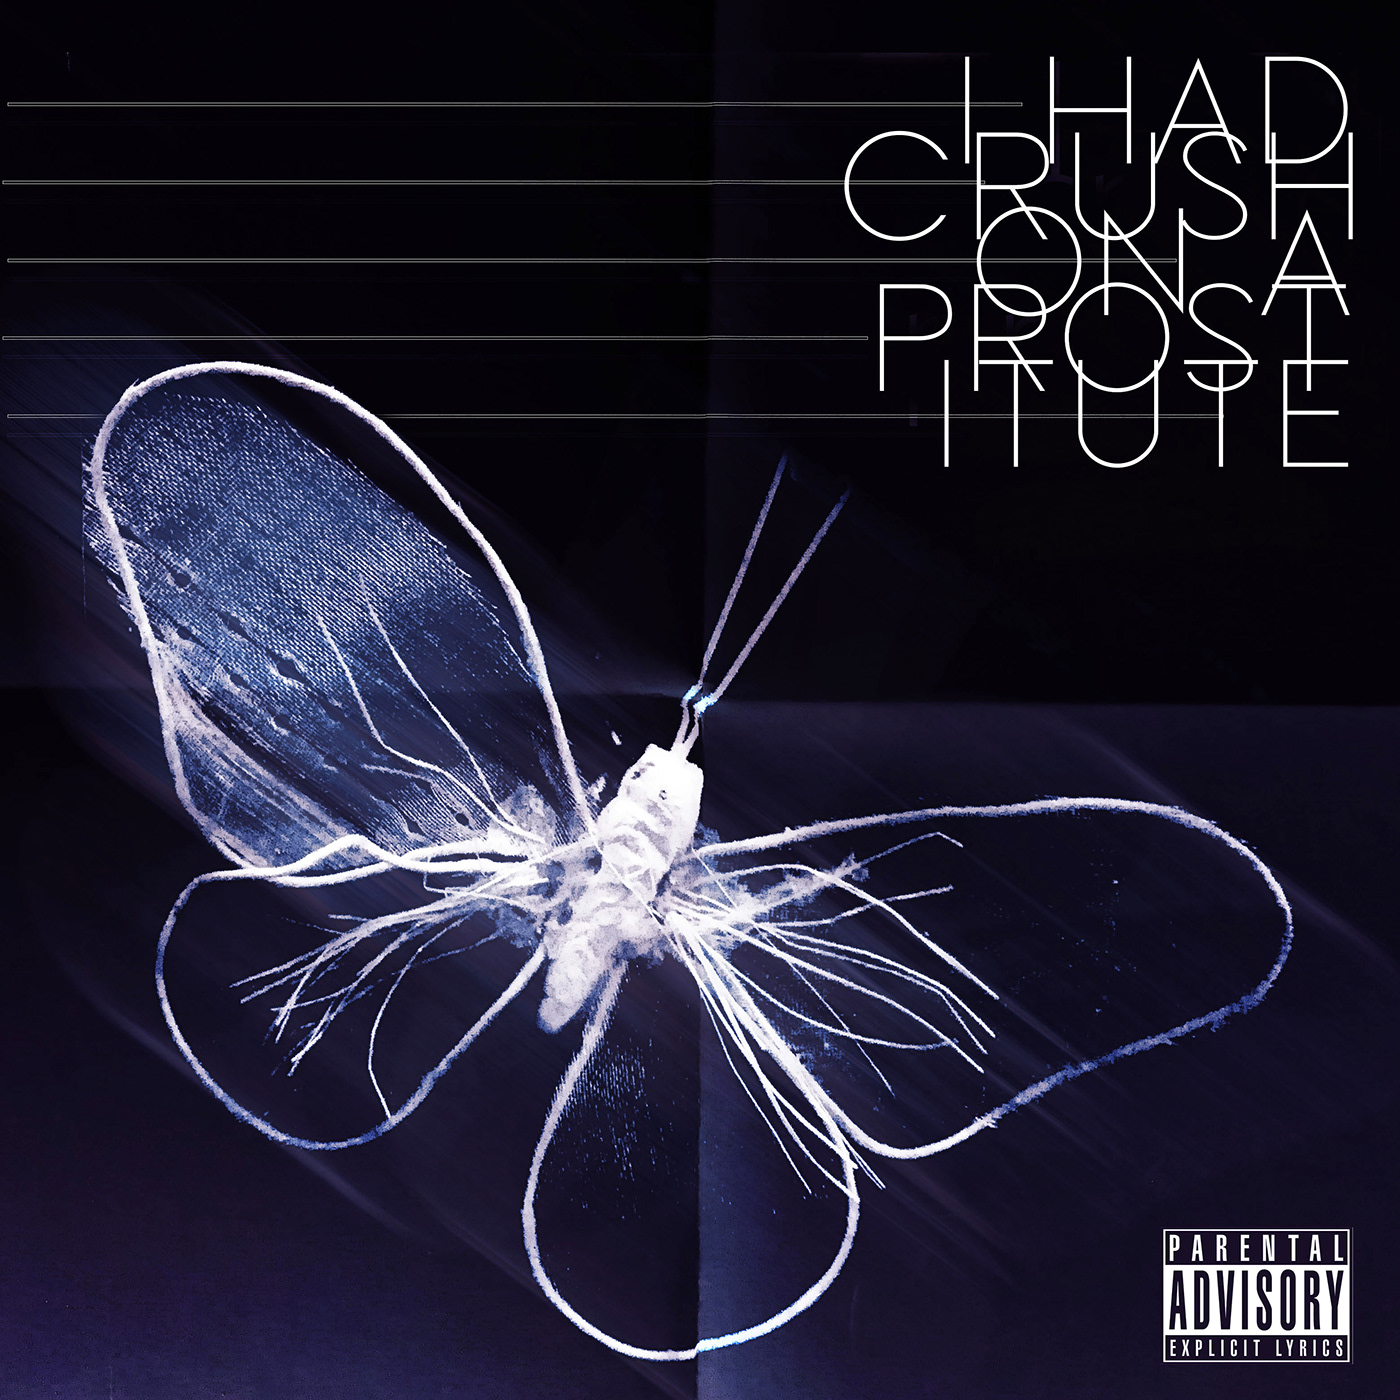 Album cover mathcore Love prostitute Crush coverdesign Graffiti